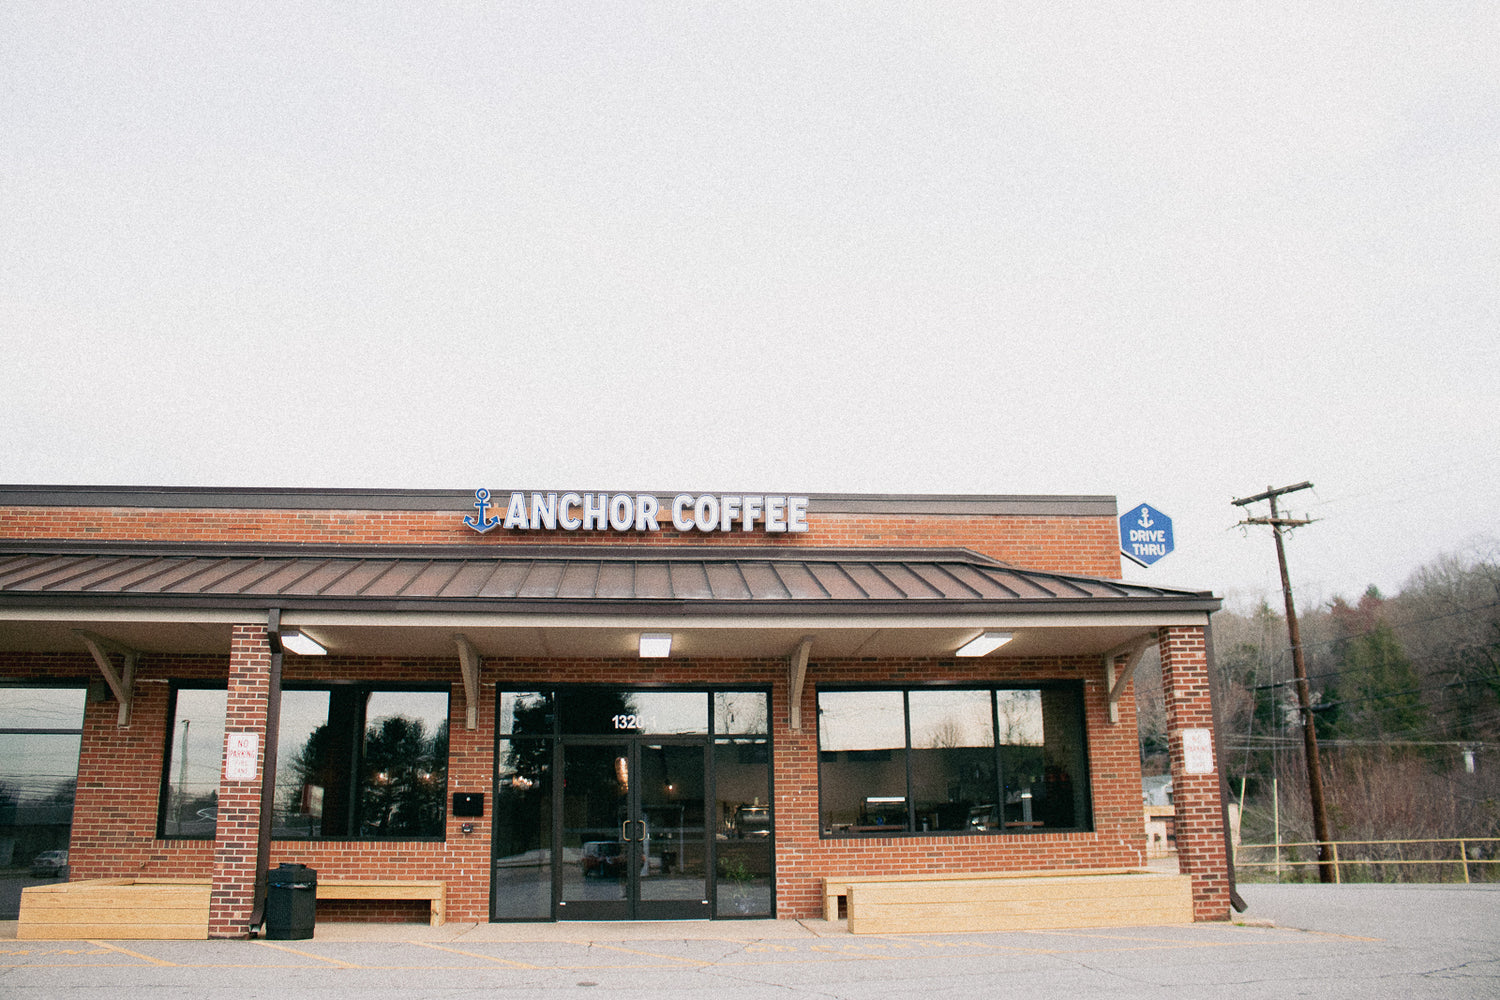 Anchor Coffee North Wilkesboro North Carolina Specialty Coffee Roaster and Cafe